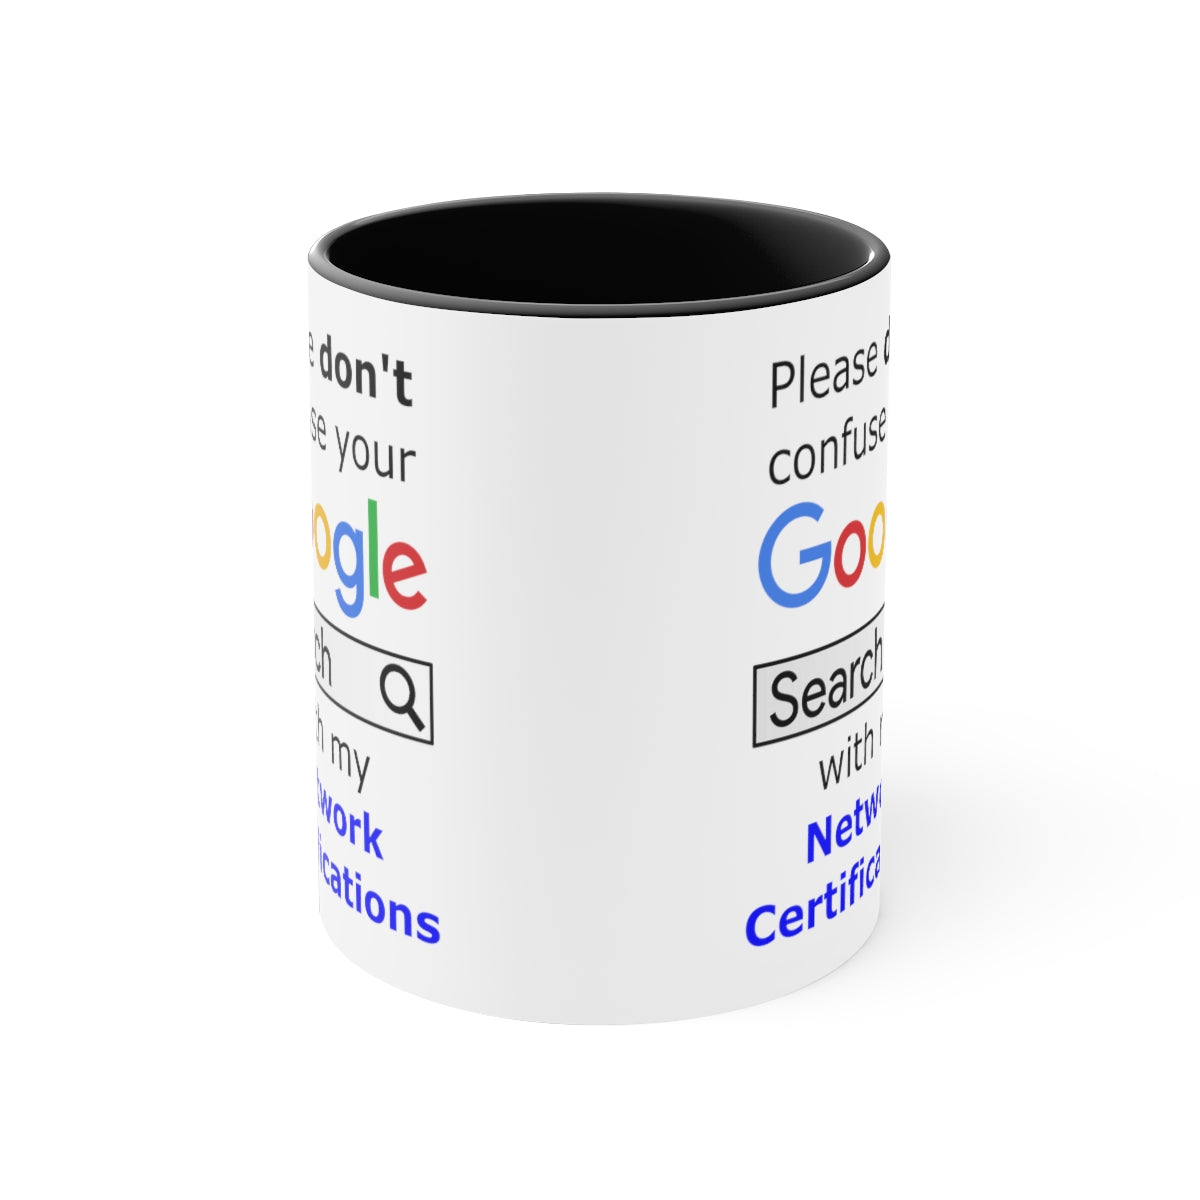 Google Network Certifications - Accent Coffee Mug, 11oz